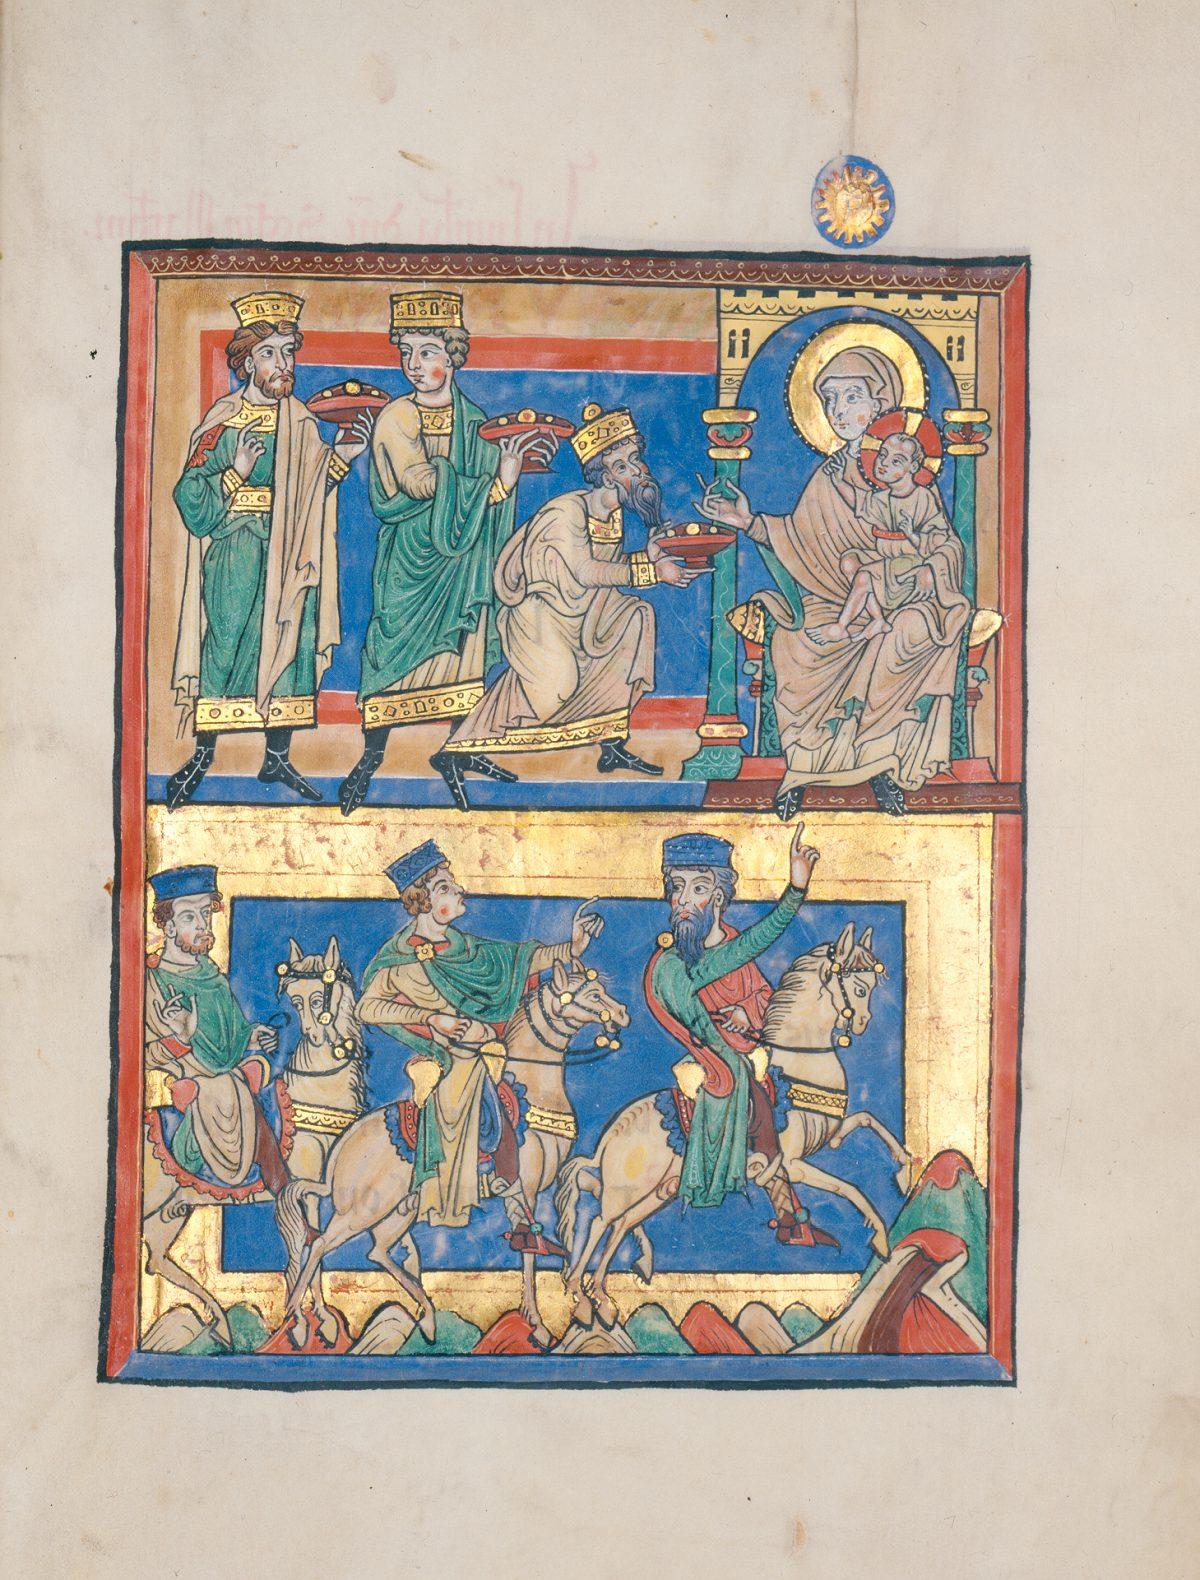 A German illuminated manuscript with two scenes of the Magi, circa, 1220. (Public Domain)